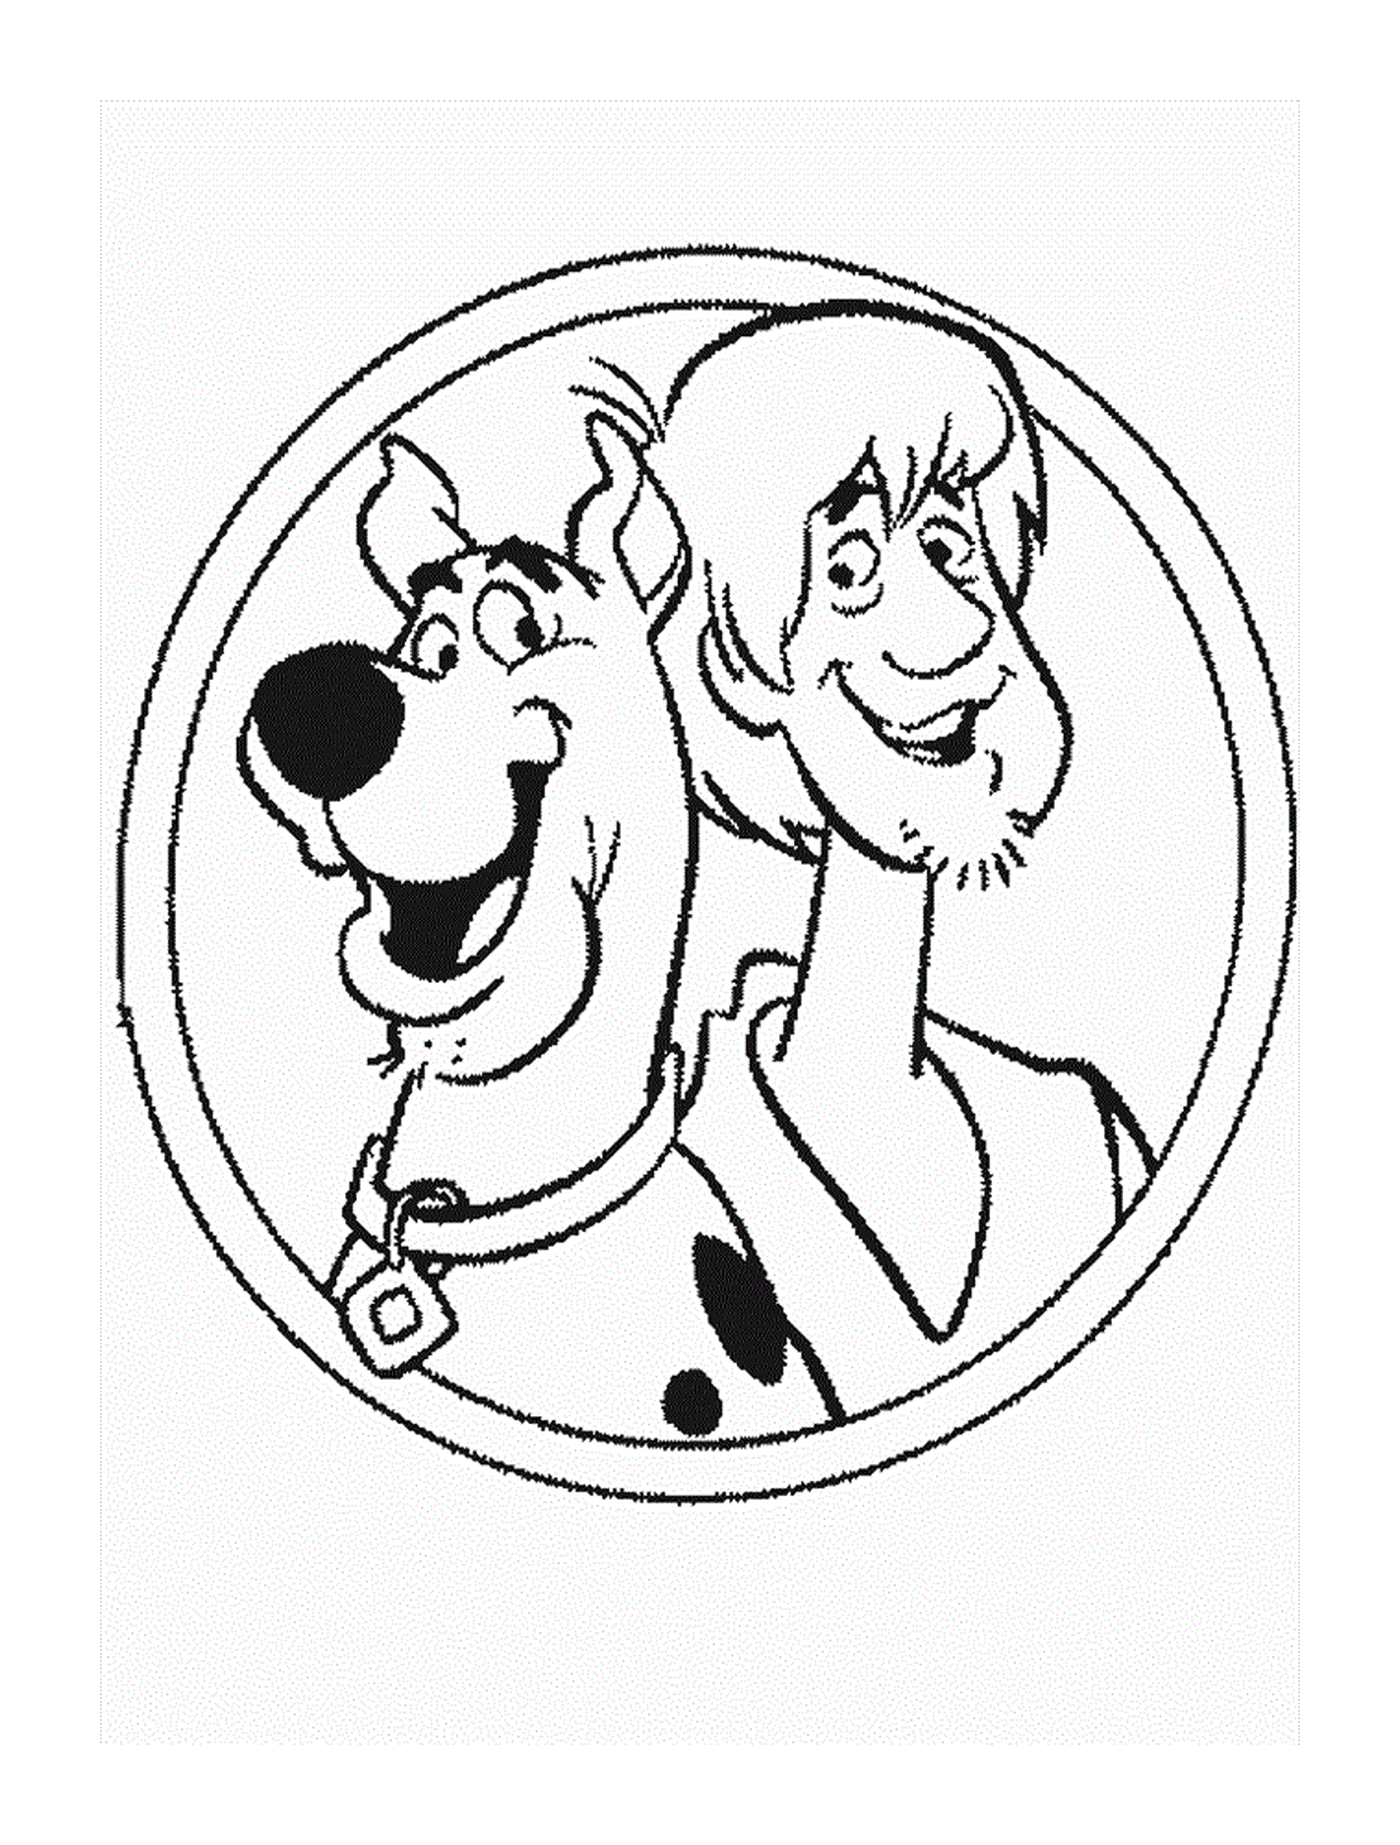  Shaggy and Scooby-Doo 